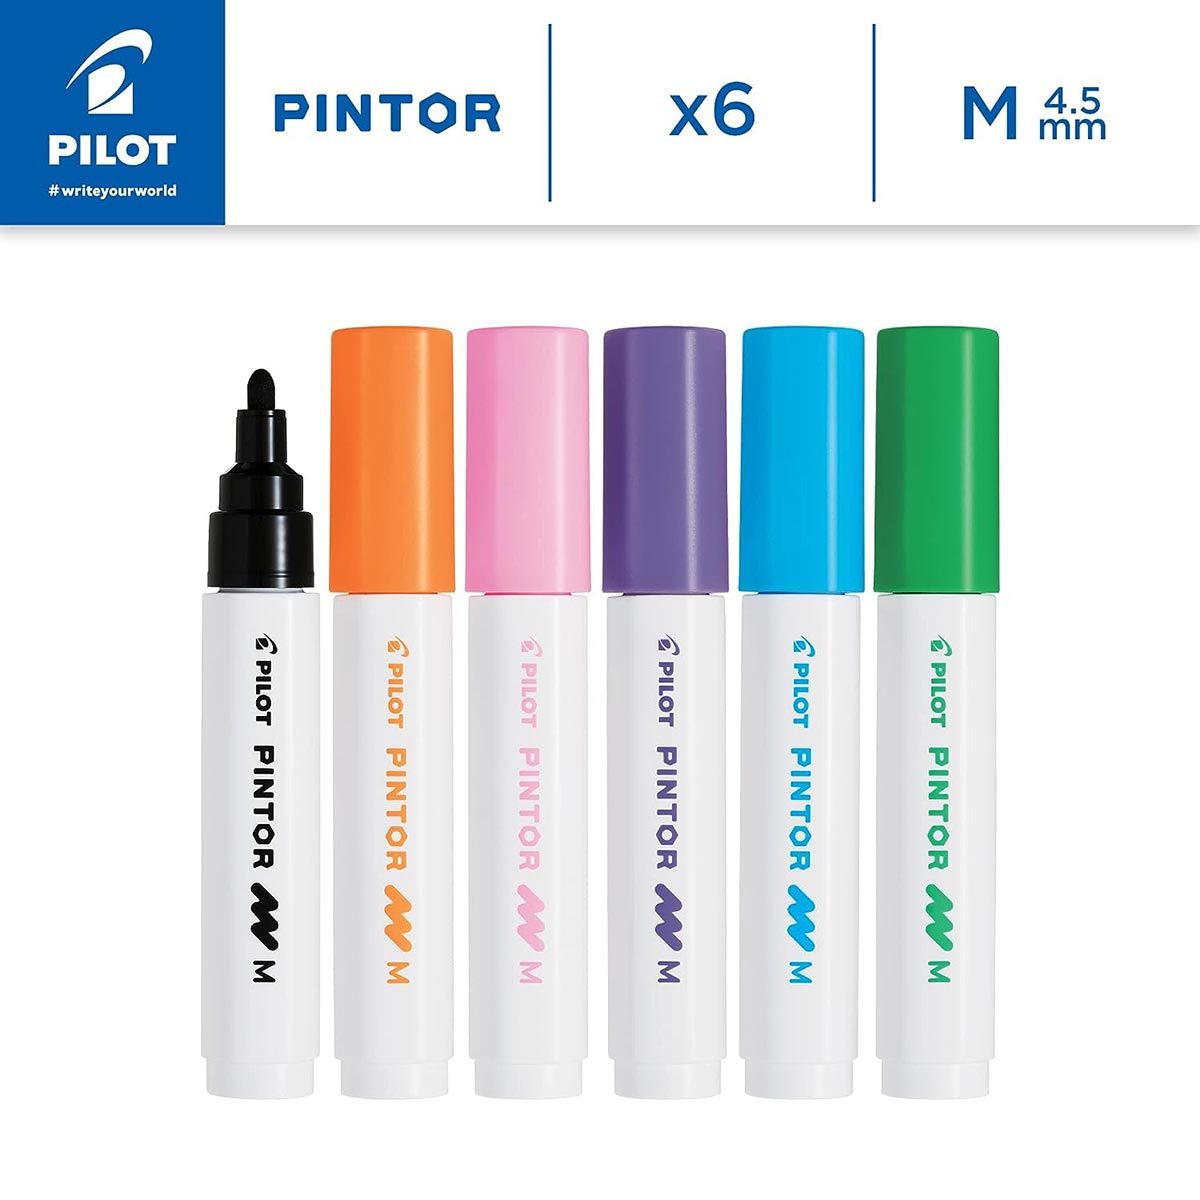 Pintor - Paint Marker Medium Tip 6 Pack - Creative